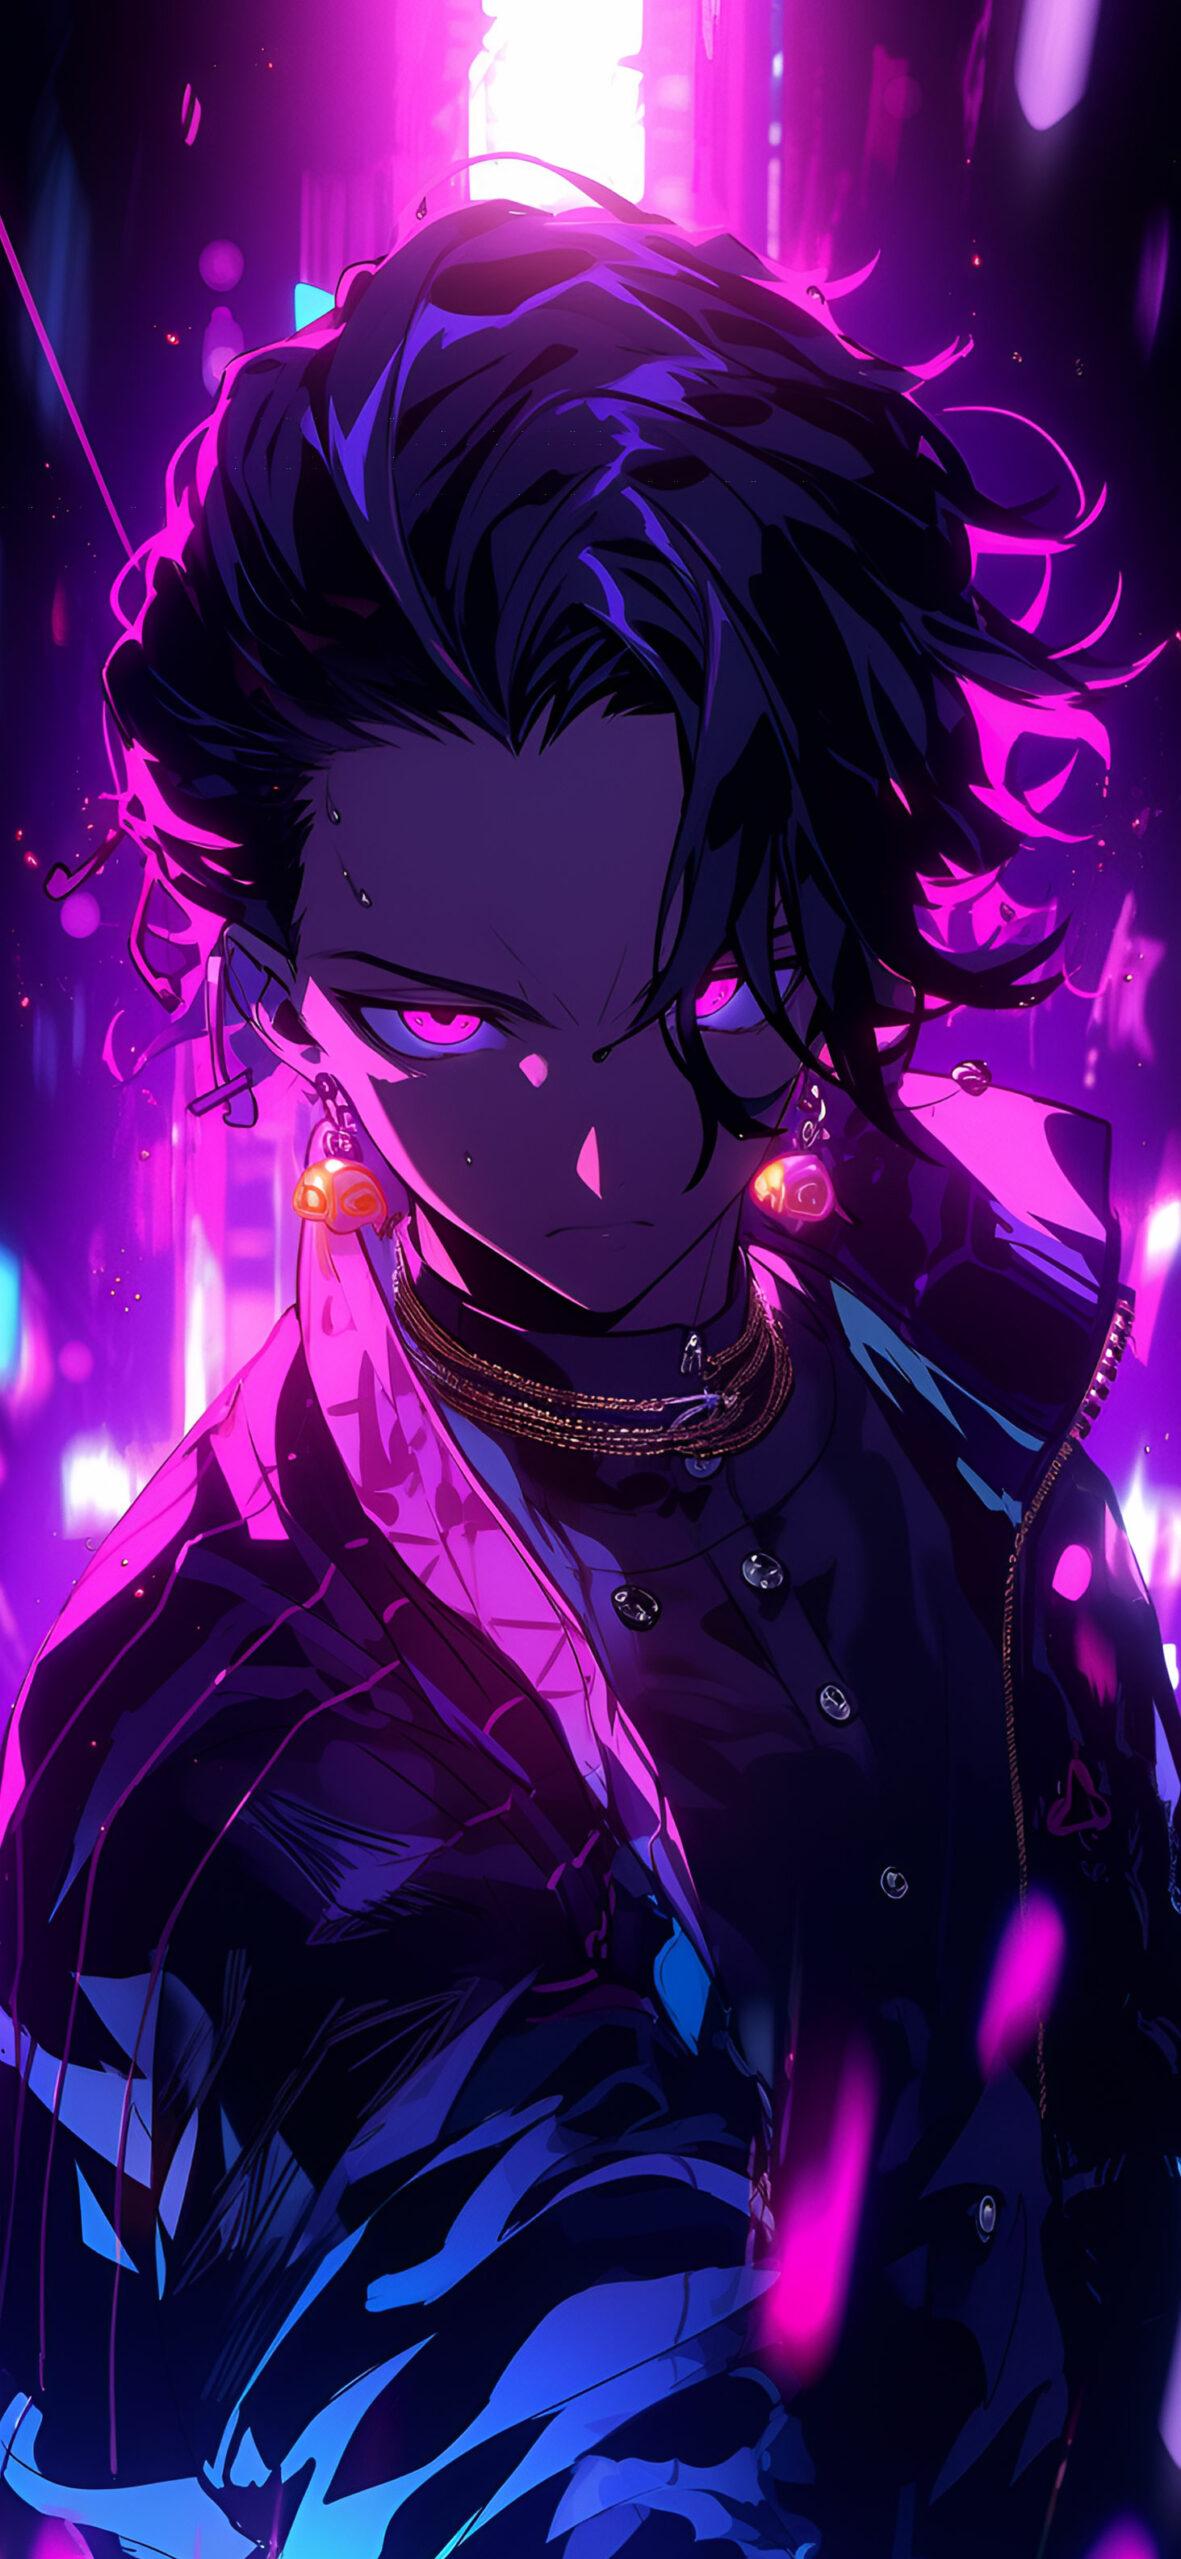 Stylish Anime Guy Purple Wallpaper 4k